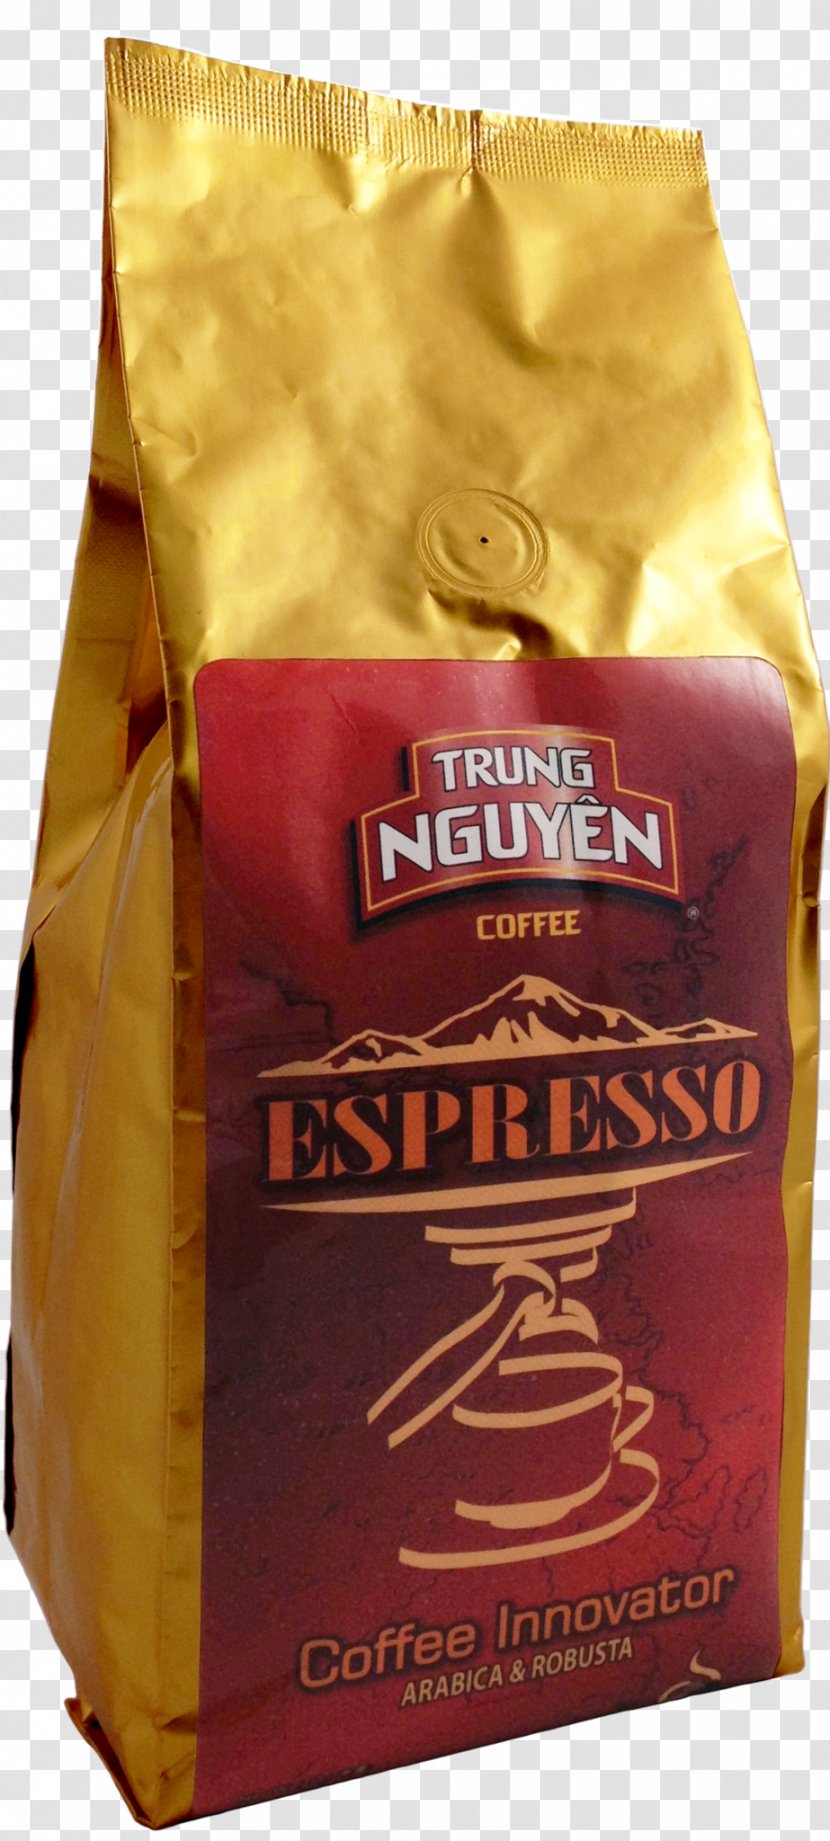 Coffee Espresso Trung Nguyên Flavor Transparent PNG